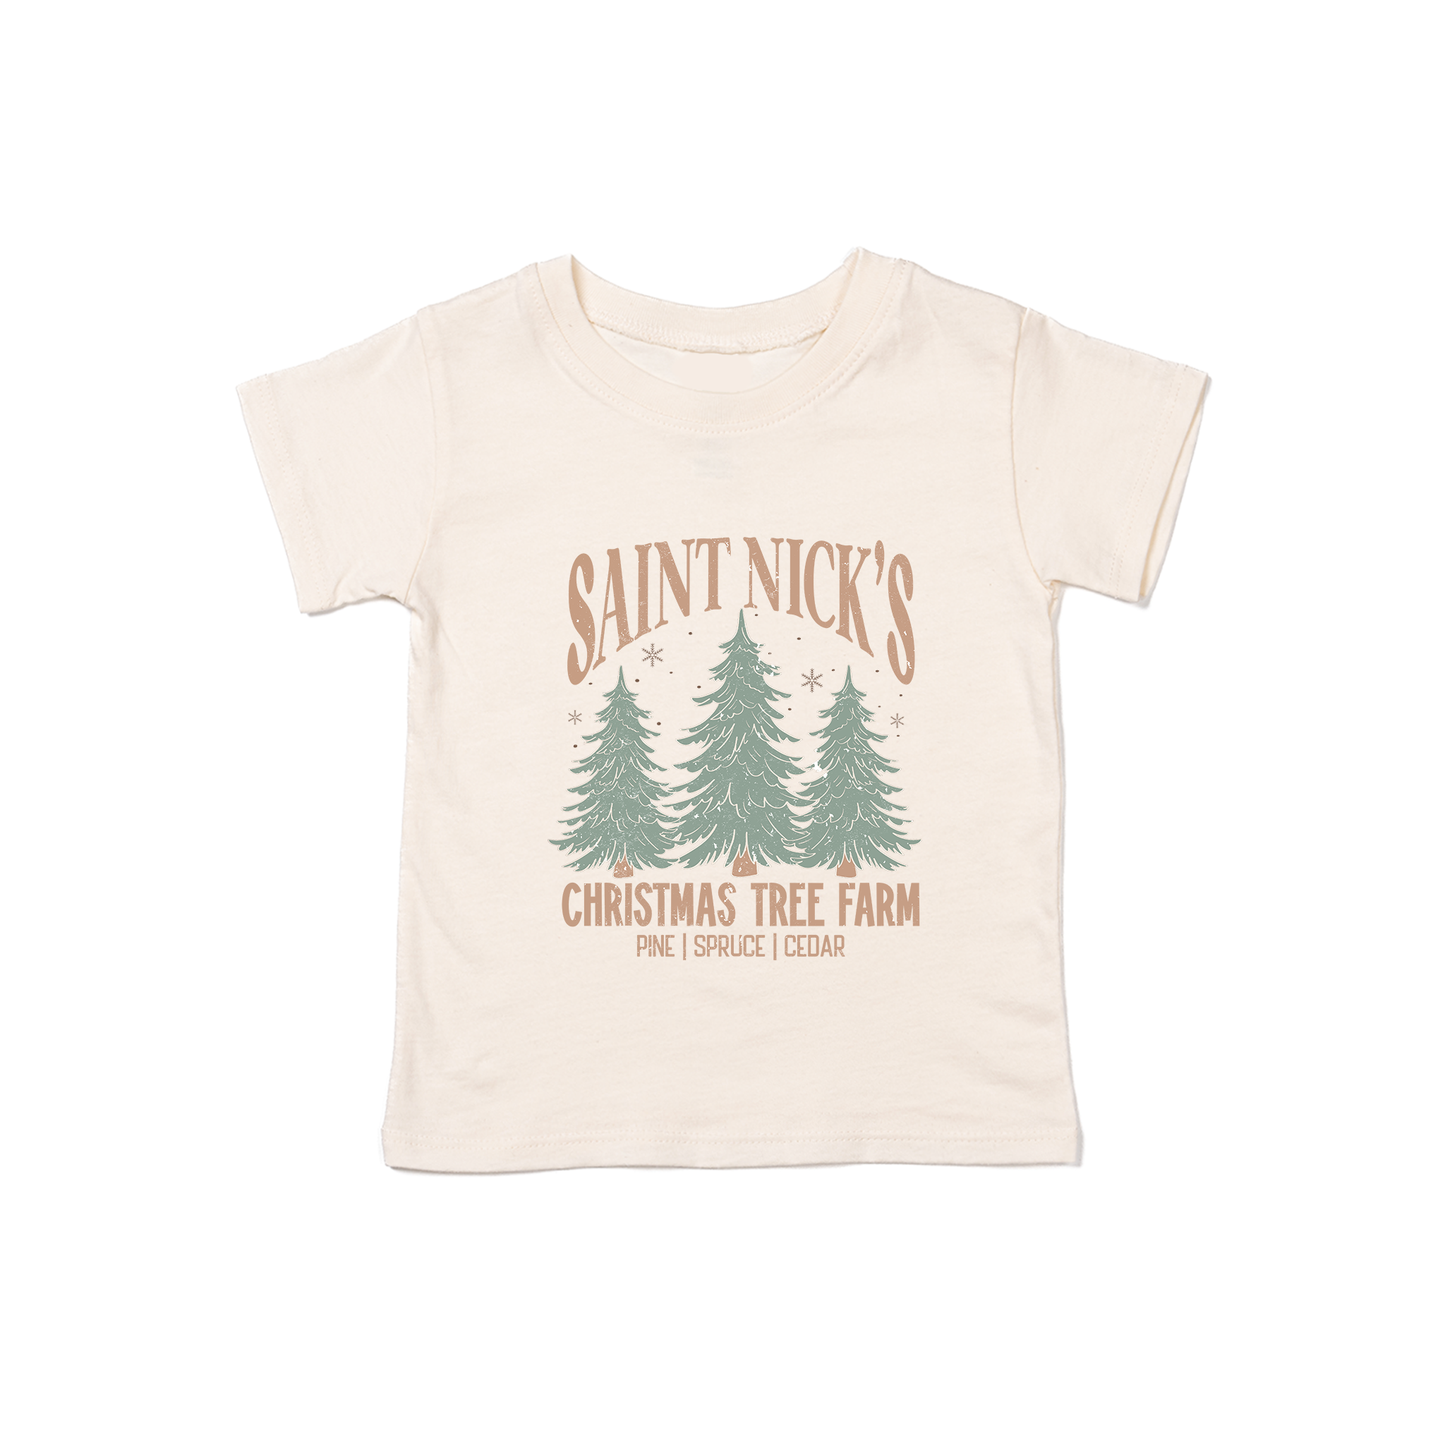 Saint Nick's Christmas Tree Farm - Kids Tee (Natural)